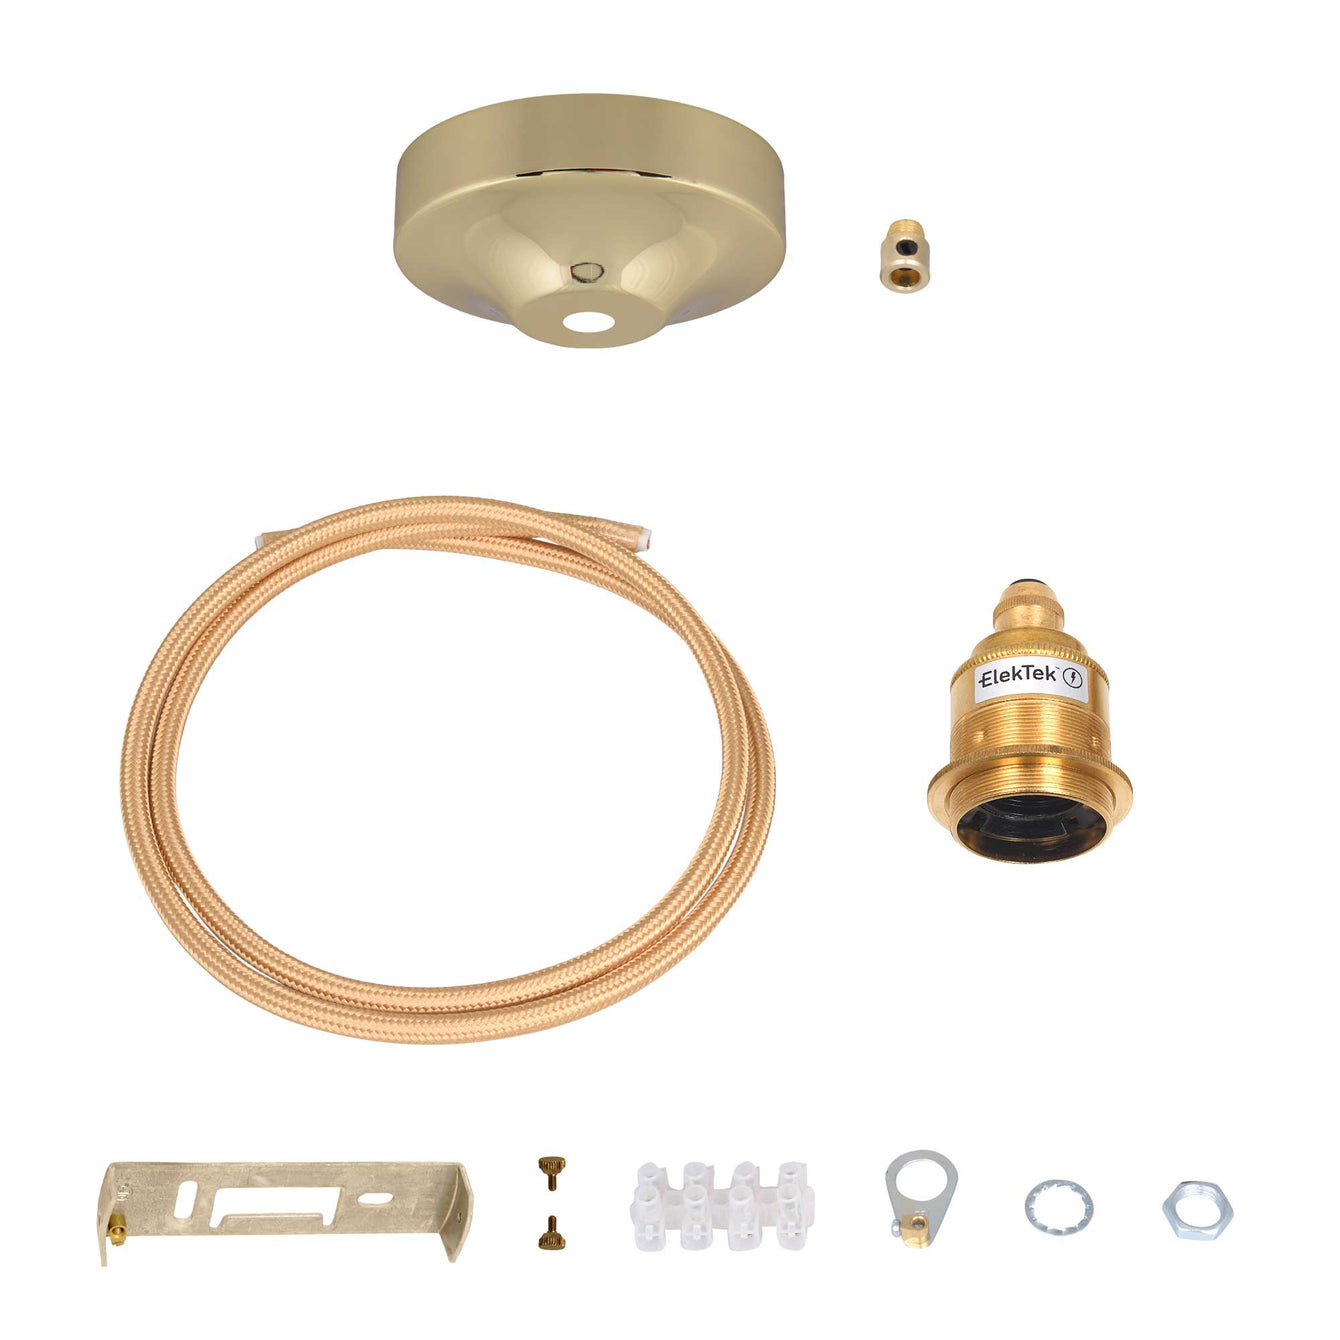 ElekTek Premium Pendant Light Kit DIY 100mm Convex Ceiling Rose, Round Flex and Lamp Holder E27 Shade Ring Cord Grip - Buy It Better Antique Brass